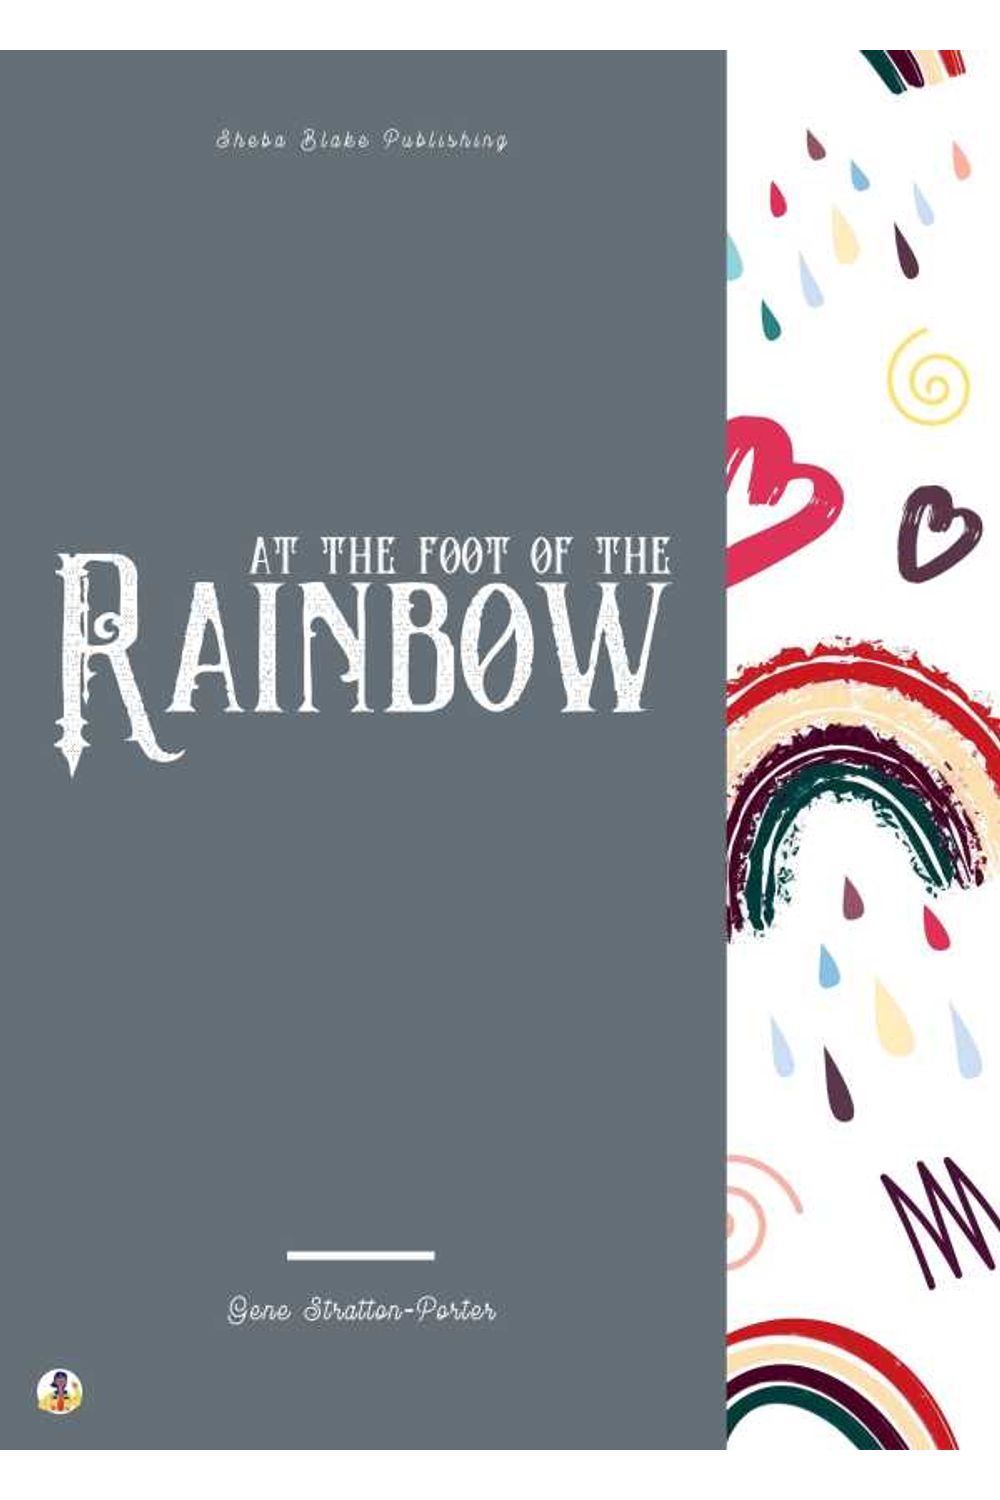 bw-at-the-foot-of-the-rainbow-sheba-blake-publishing-9783986772581